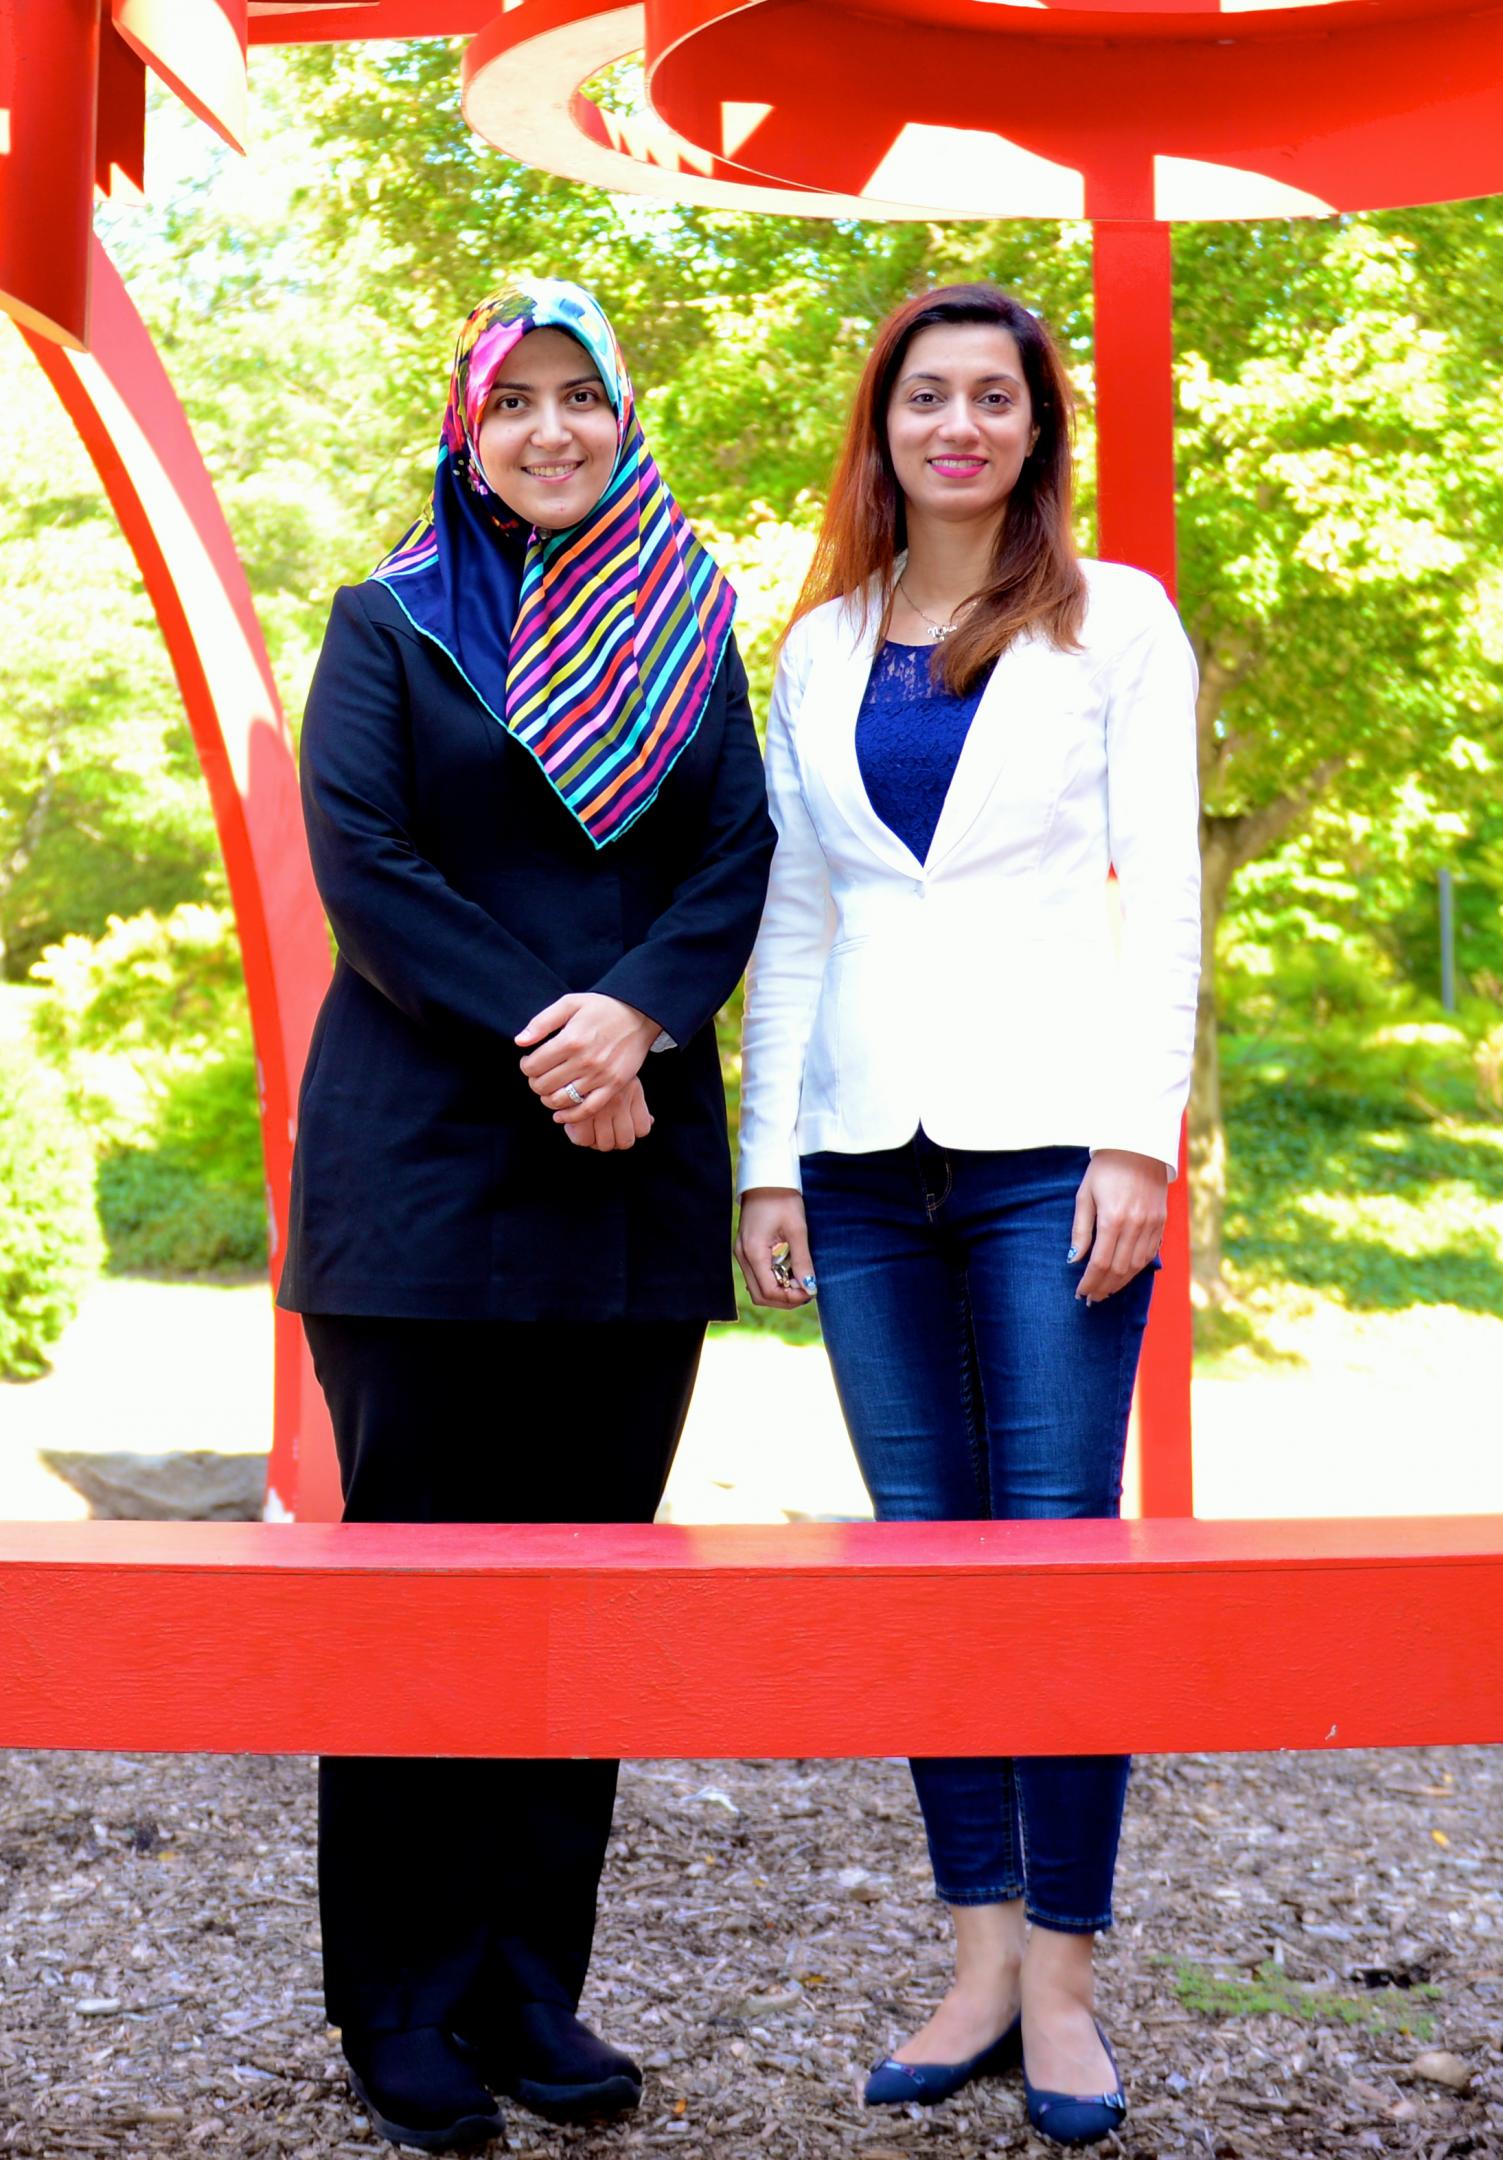 New YSU faculty members, Hoda Atef Yetka and Nazanin Naderi